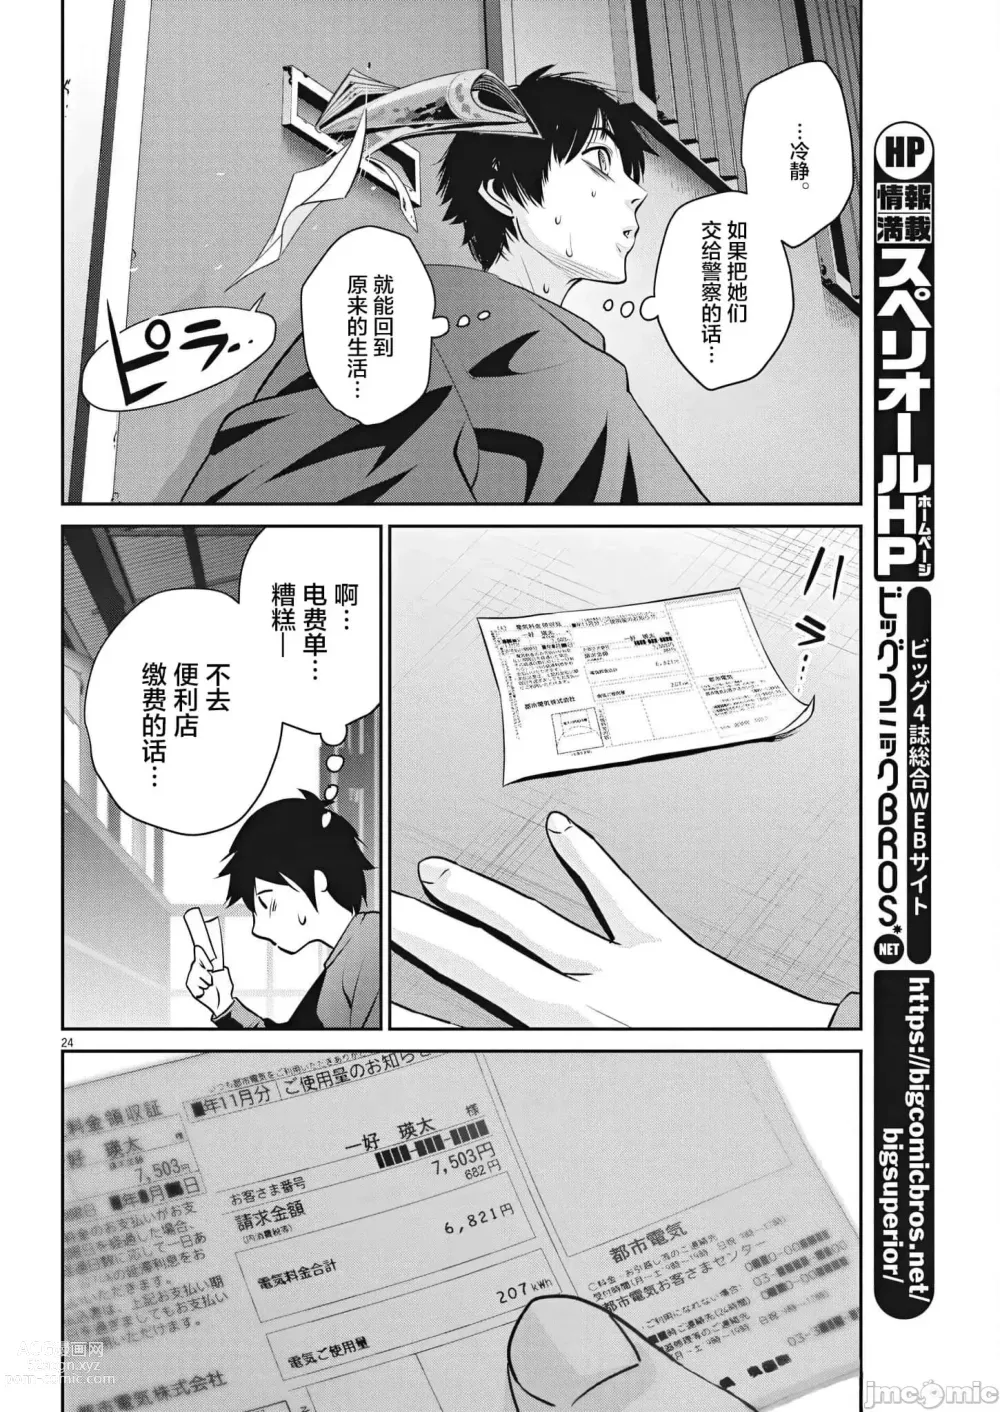 Page 119 of manga Big Comics Superior